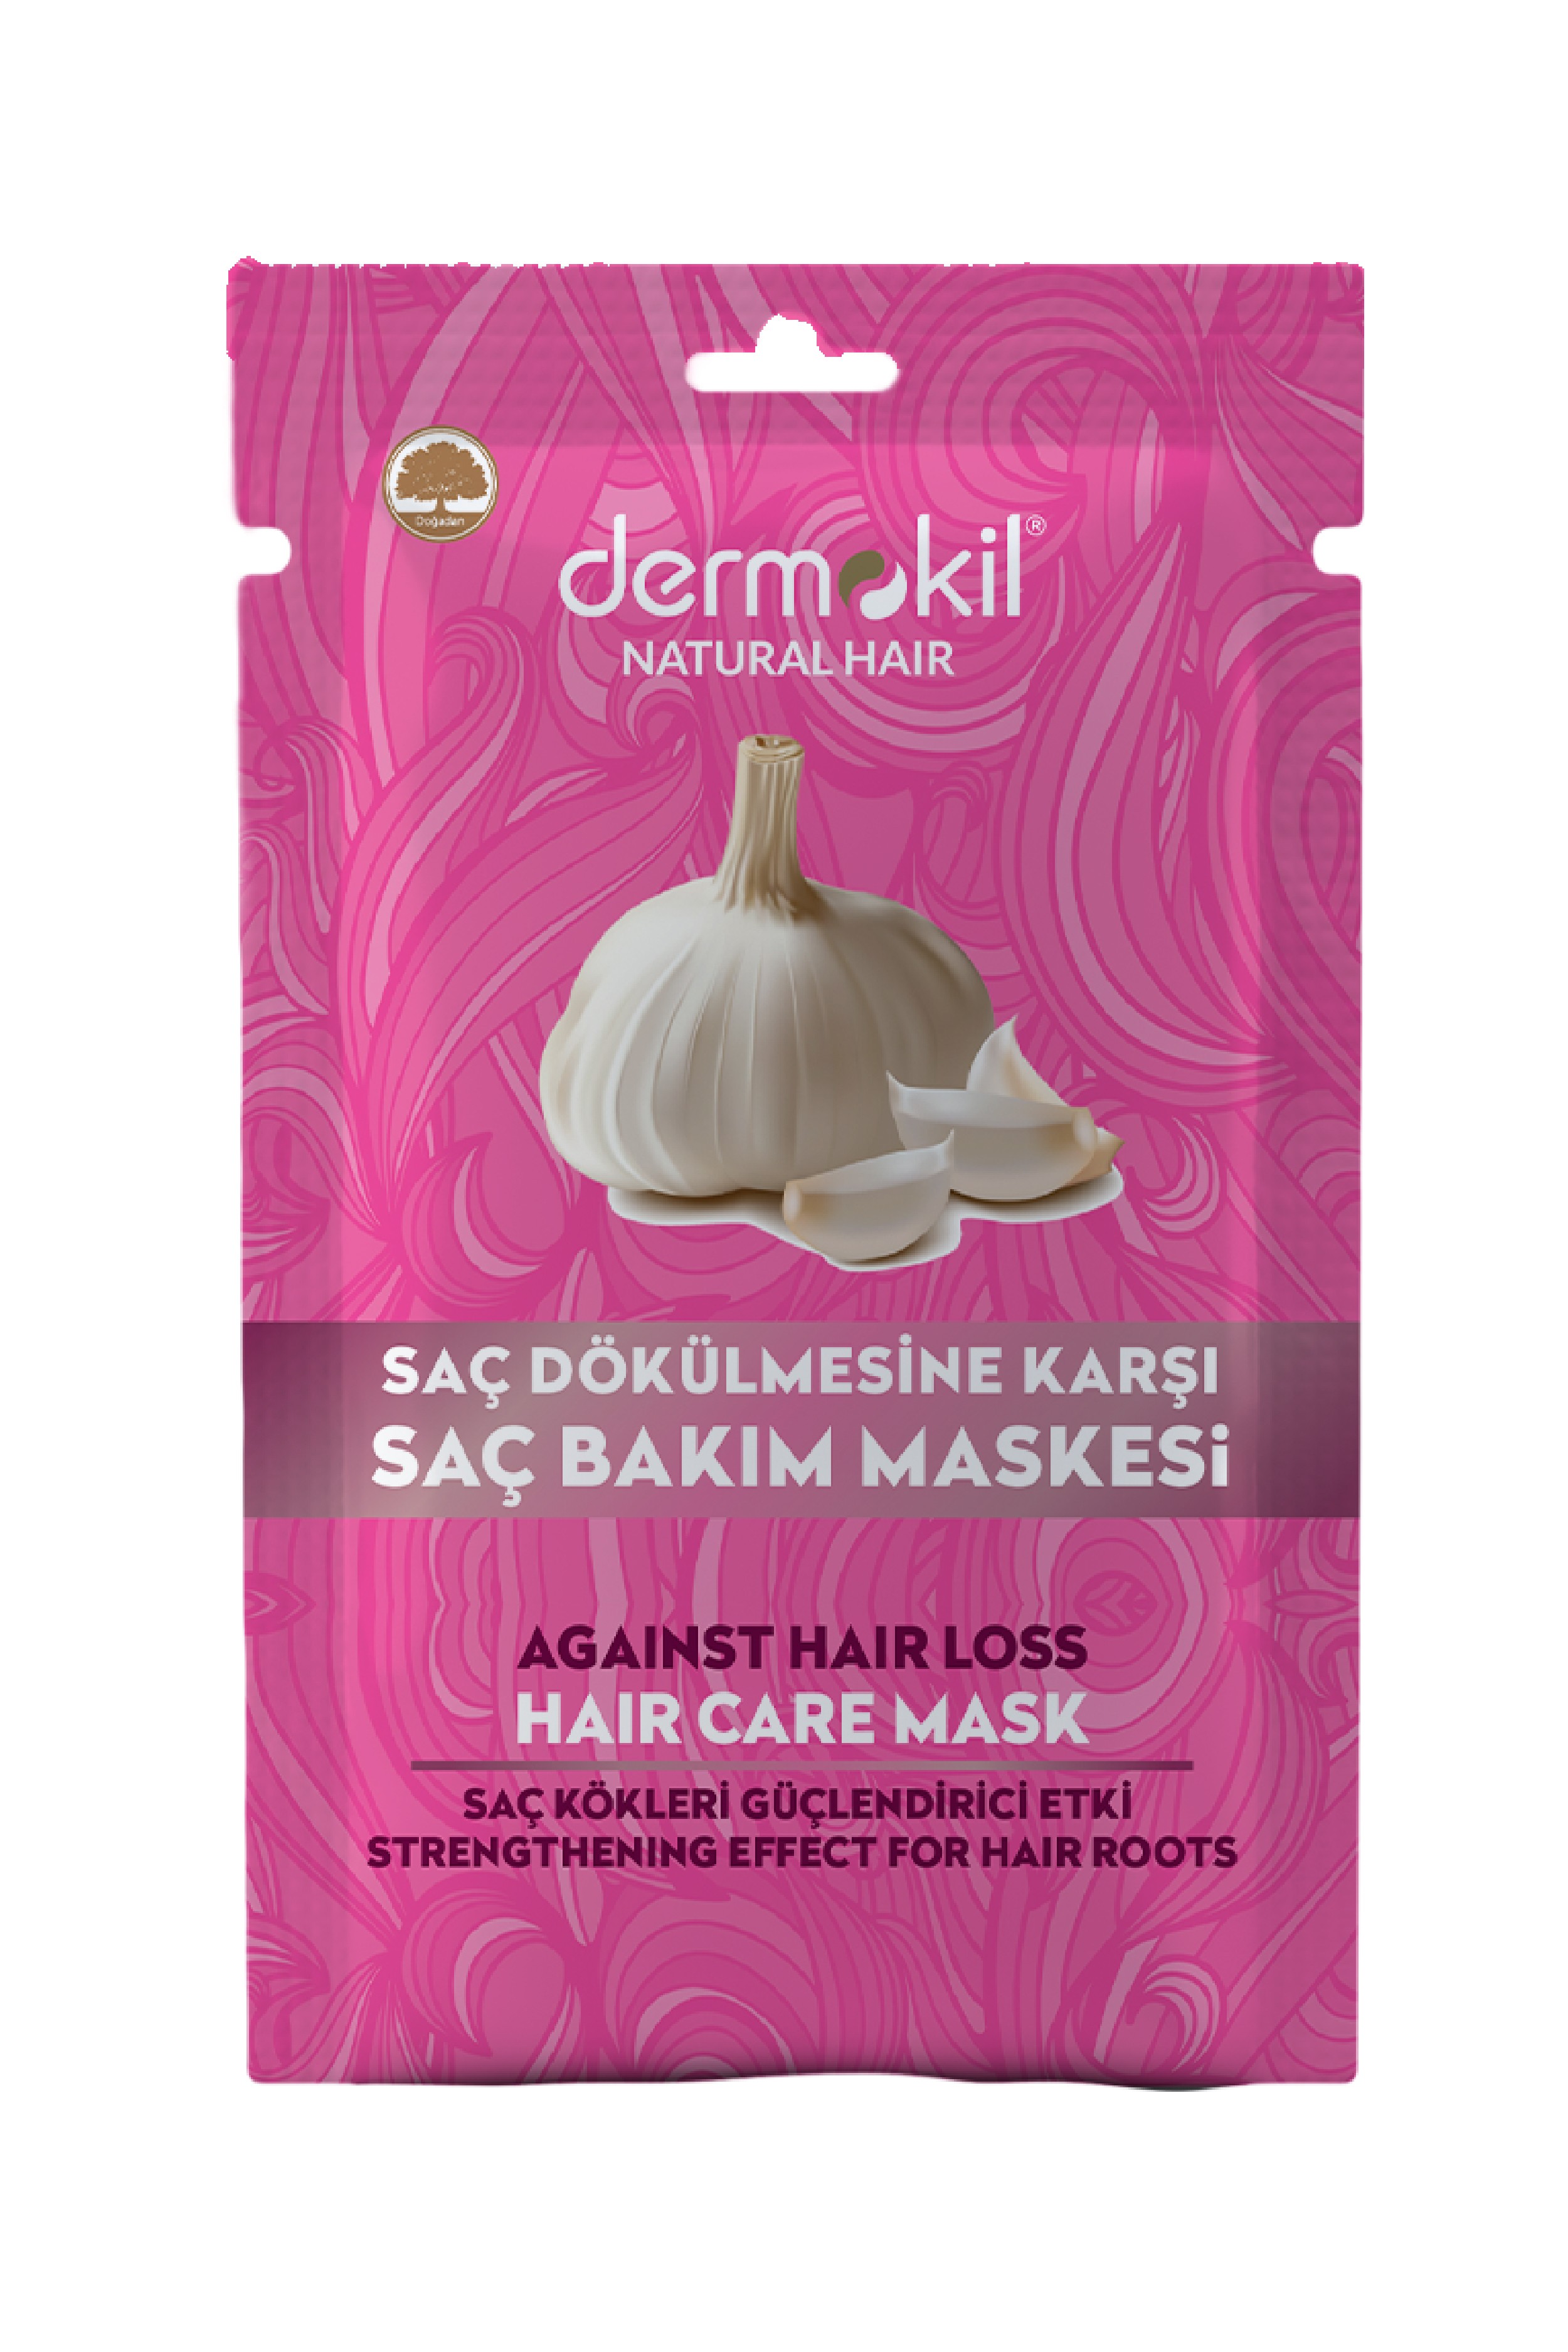 Vegan hair care mask clay and garlic strengthening effect 35 ml against hair loss